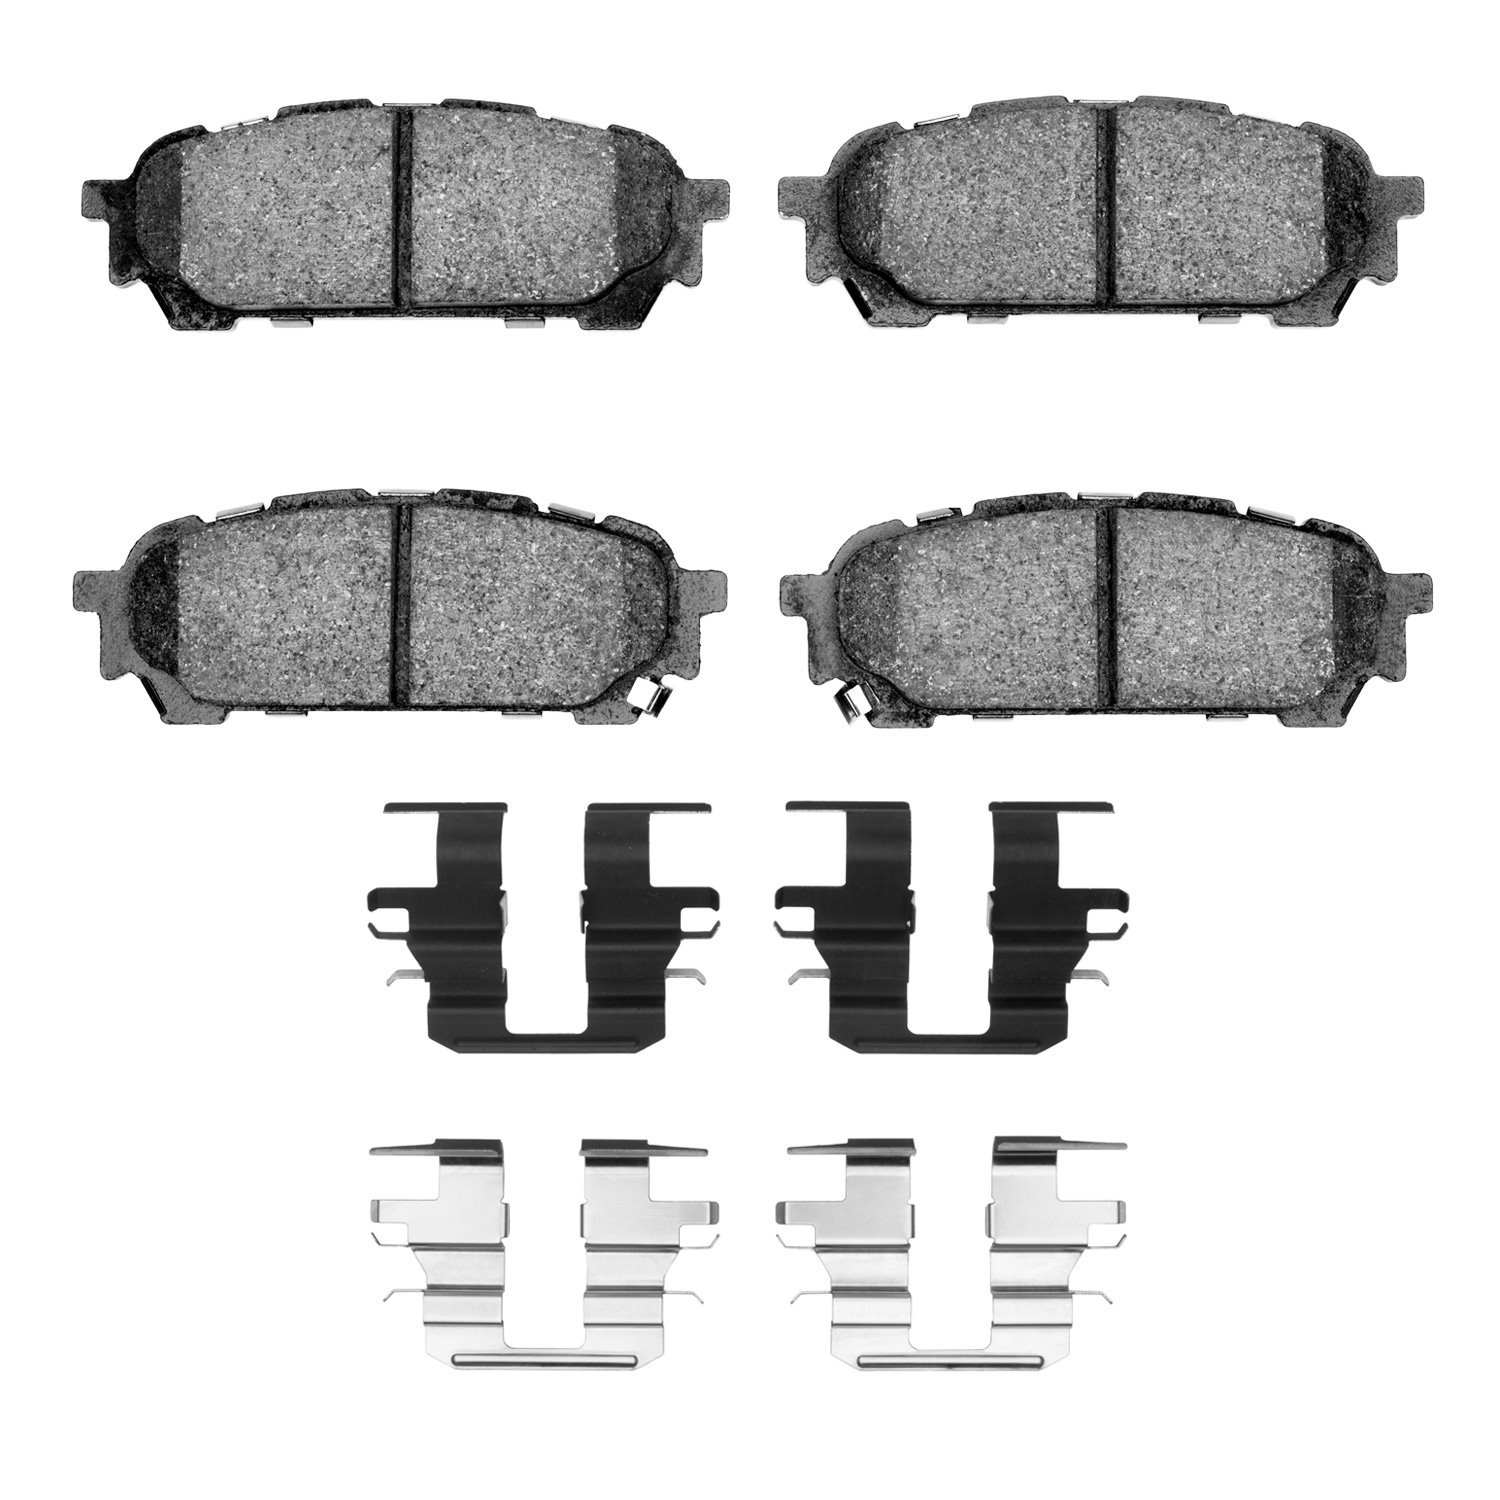 Semi-Metallic Brake Pads & Hardware Kit, 2003-2008 Fits Multiple Makes/Models, Position: Rear